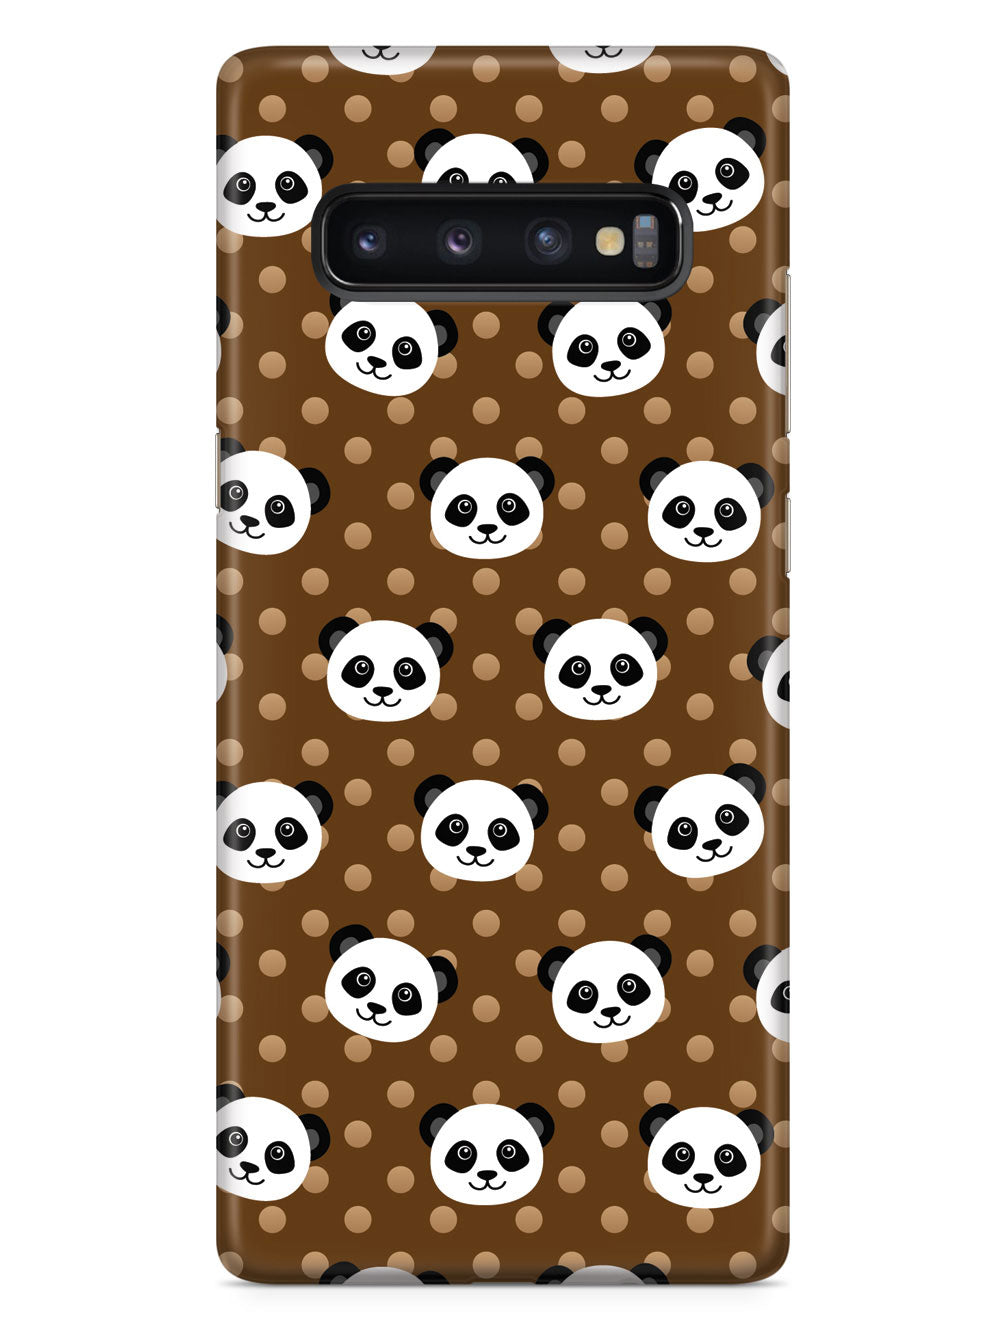 Cute Panda Pattern - Brown Polka Dots Case